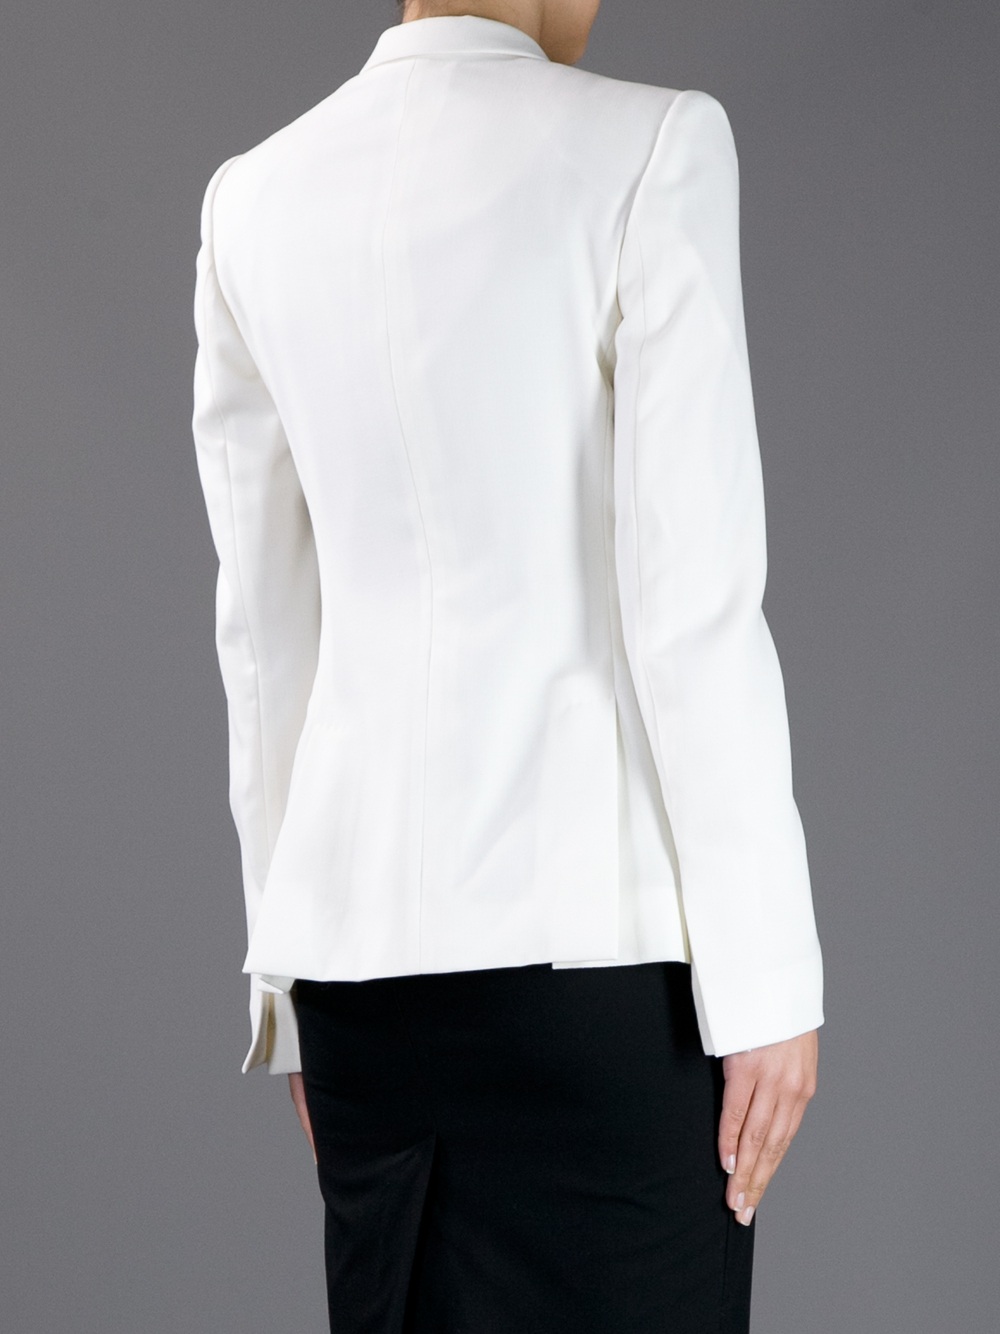 Lyst - Stella mccartney Roman Blazer Jacket in White